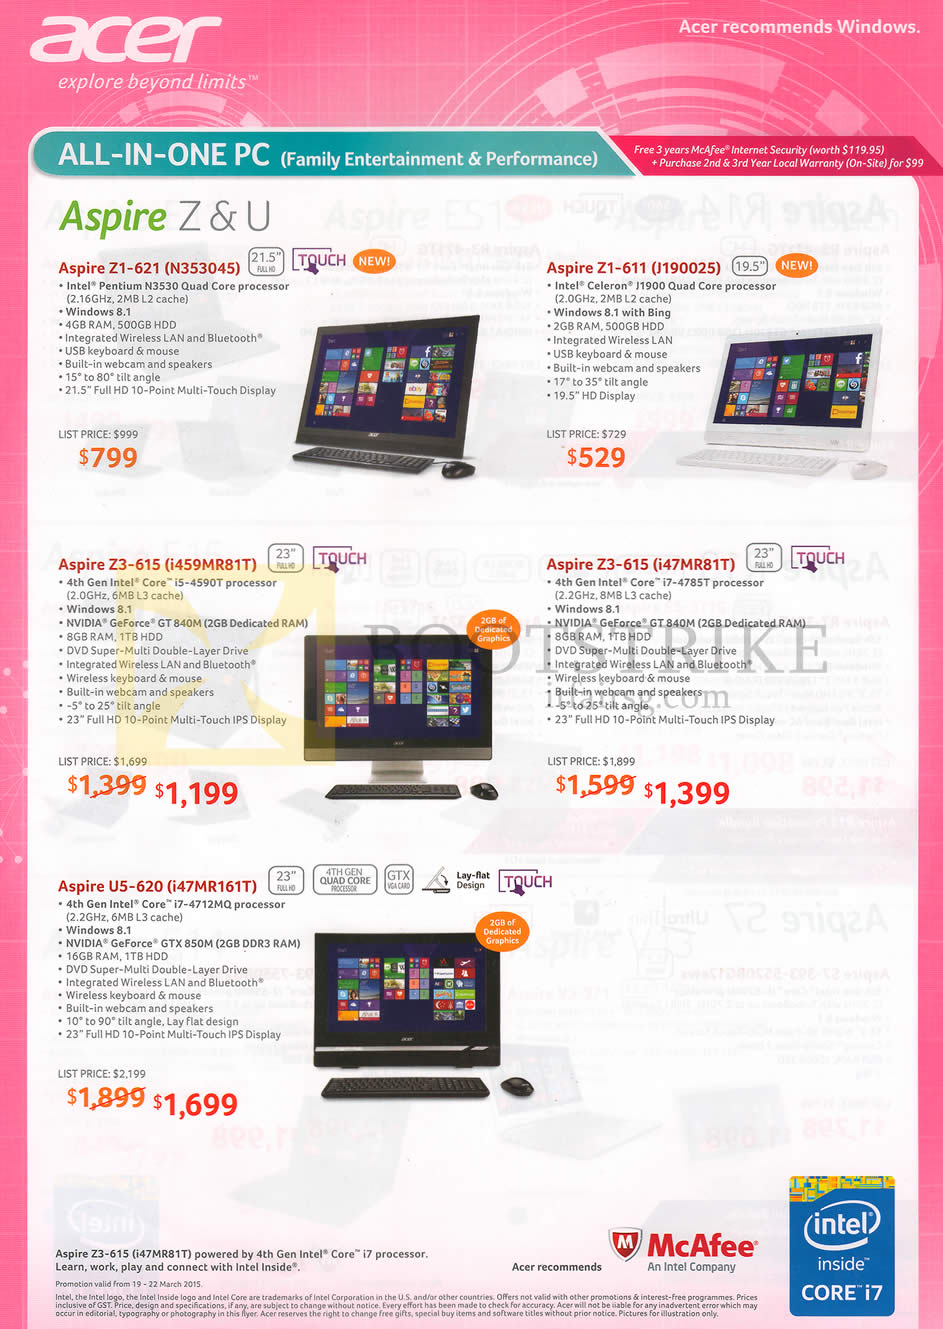 IT SHOW 2015 price list image brochure of Acer Notebooks Aspire Z1-621, Z1-611, Z3-615, U5-620